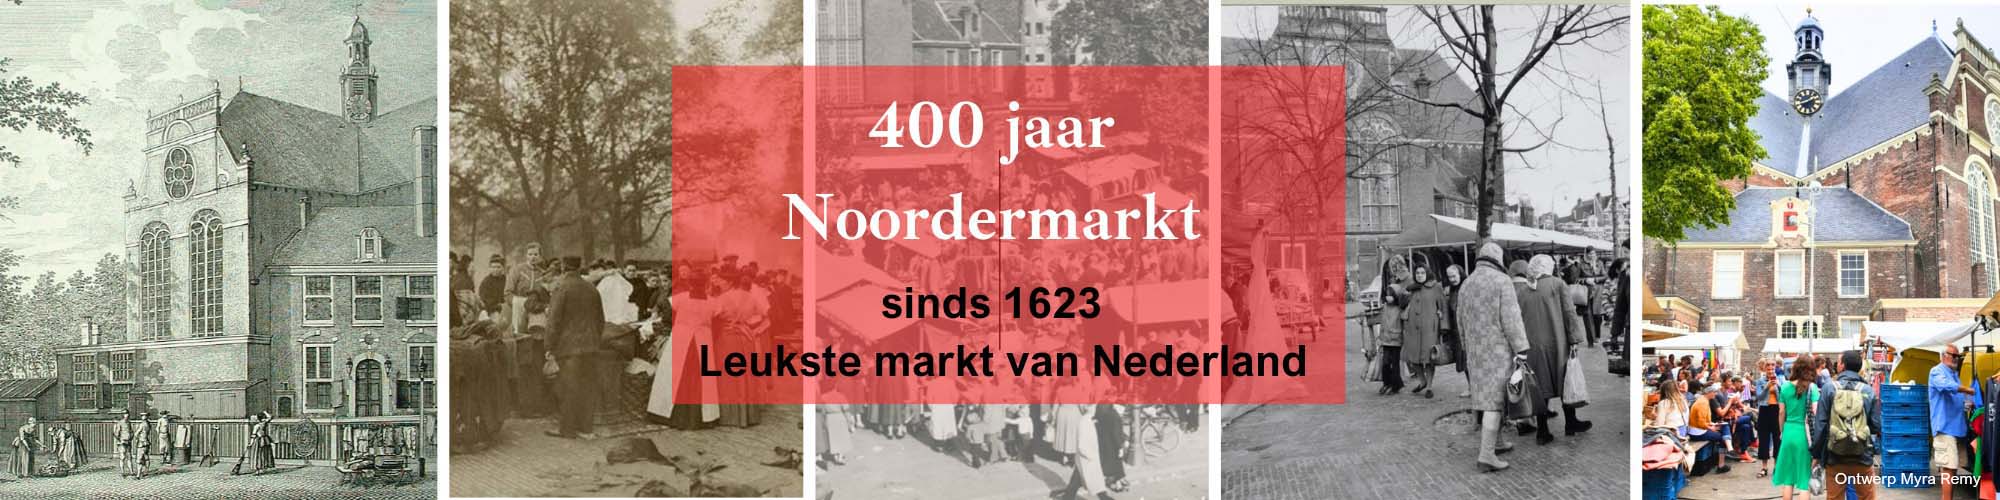 https://www.noordermarkt-amsterdam.nl/uploads/images/fotostroke/Historie-400 jaar.jpg